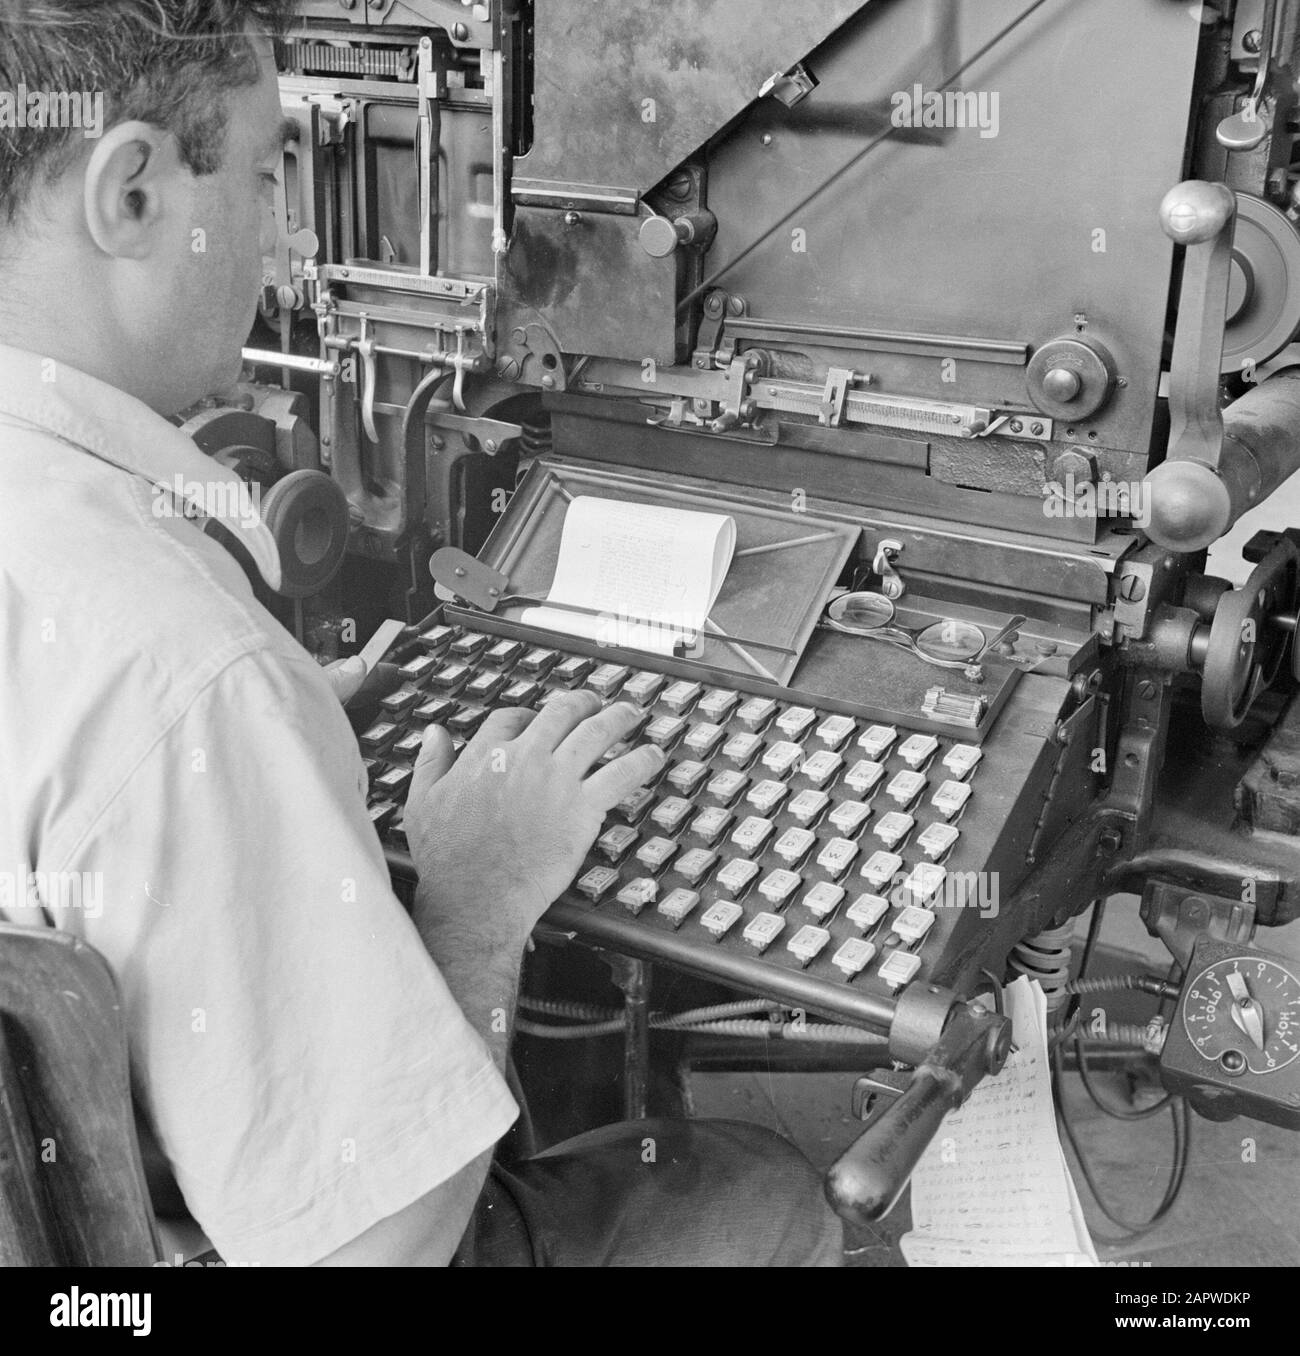 Israel 1948-1949: daily Dawar  Machine maker at work on the lynotype Date: Mon 1949 may 16 Location: Israel, Tel Aviv Keywords: printing, graphic arts, newspapers, machines, media, press Stock Photo